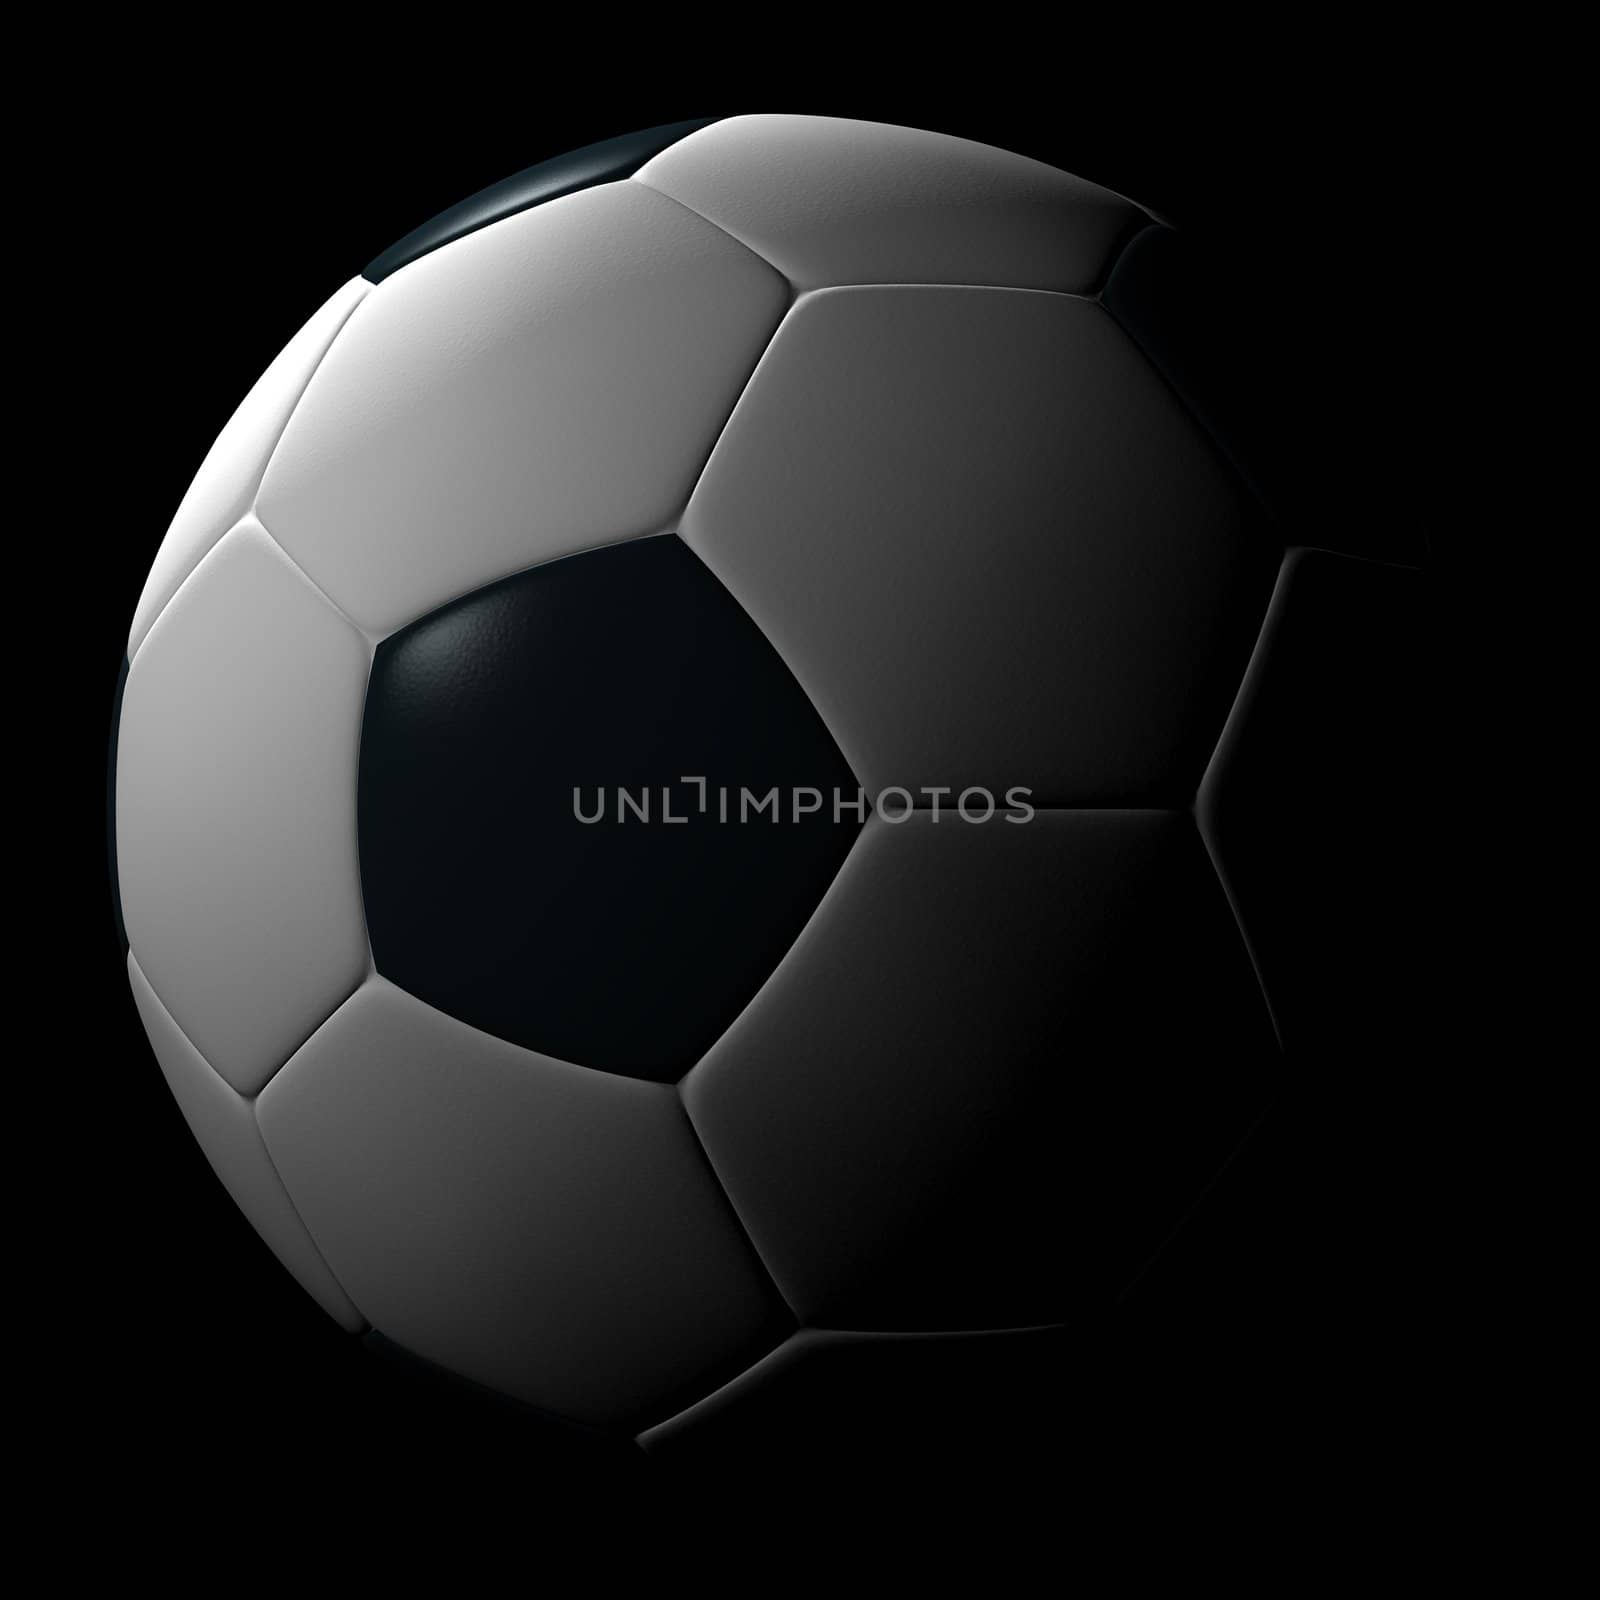 Soccer ball by anki21